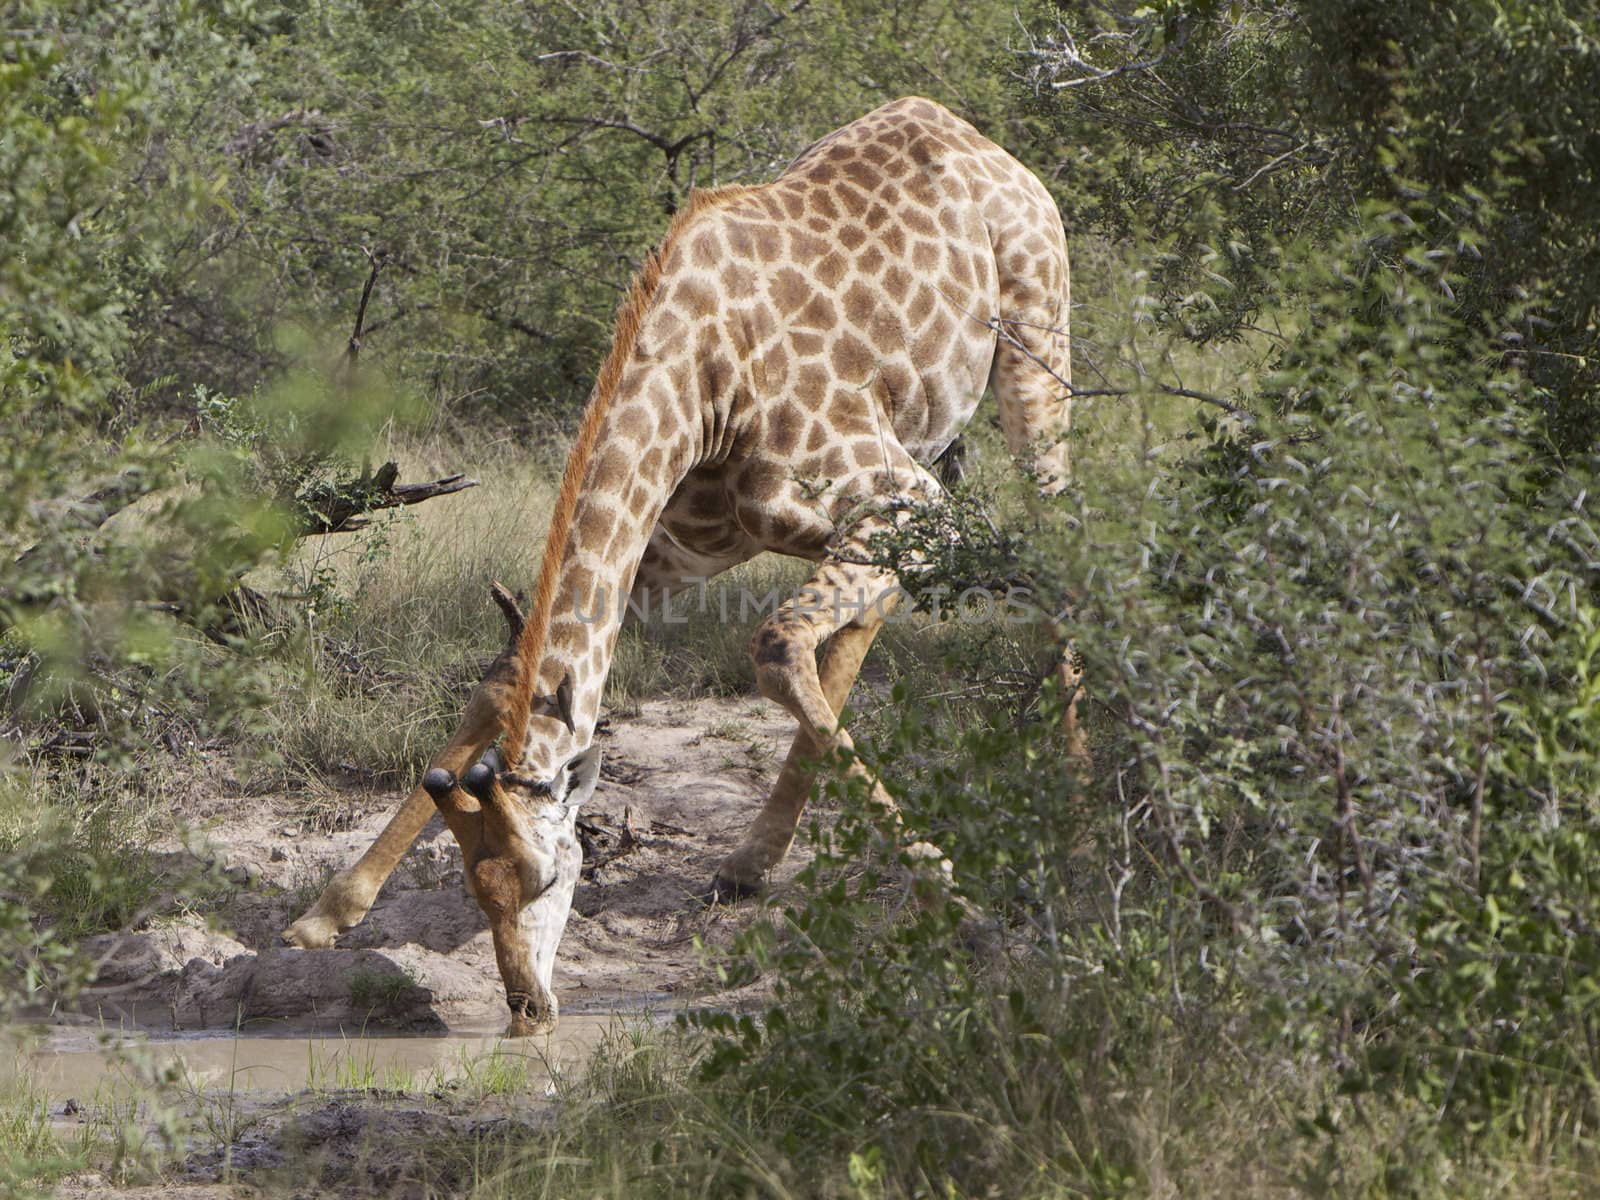 Giraffe drinking (Giraffa camelopardalis) Kruger National Park, South Africa